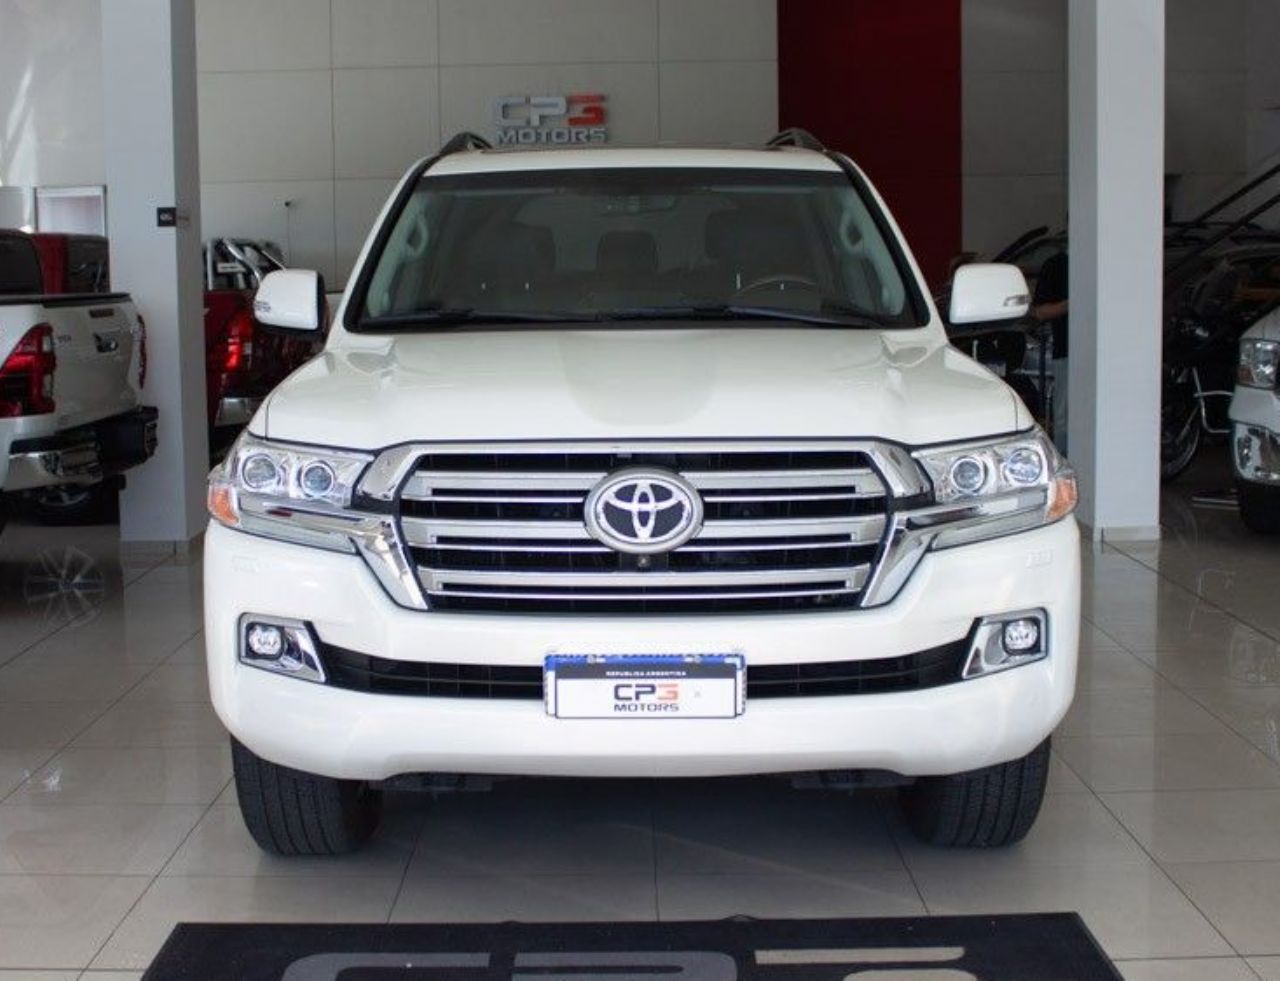 Toyota Land Cruiser Usado en Mendoza, deRuedas